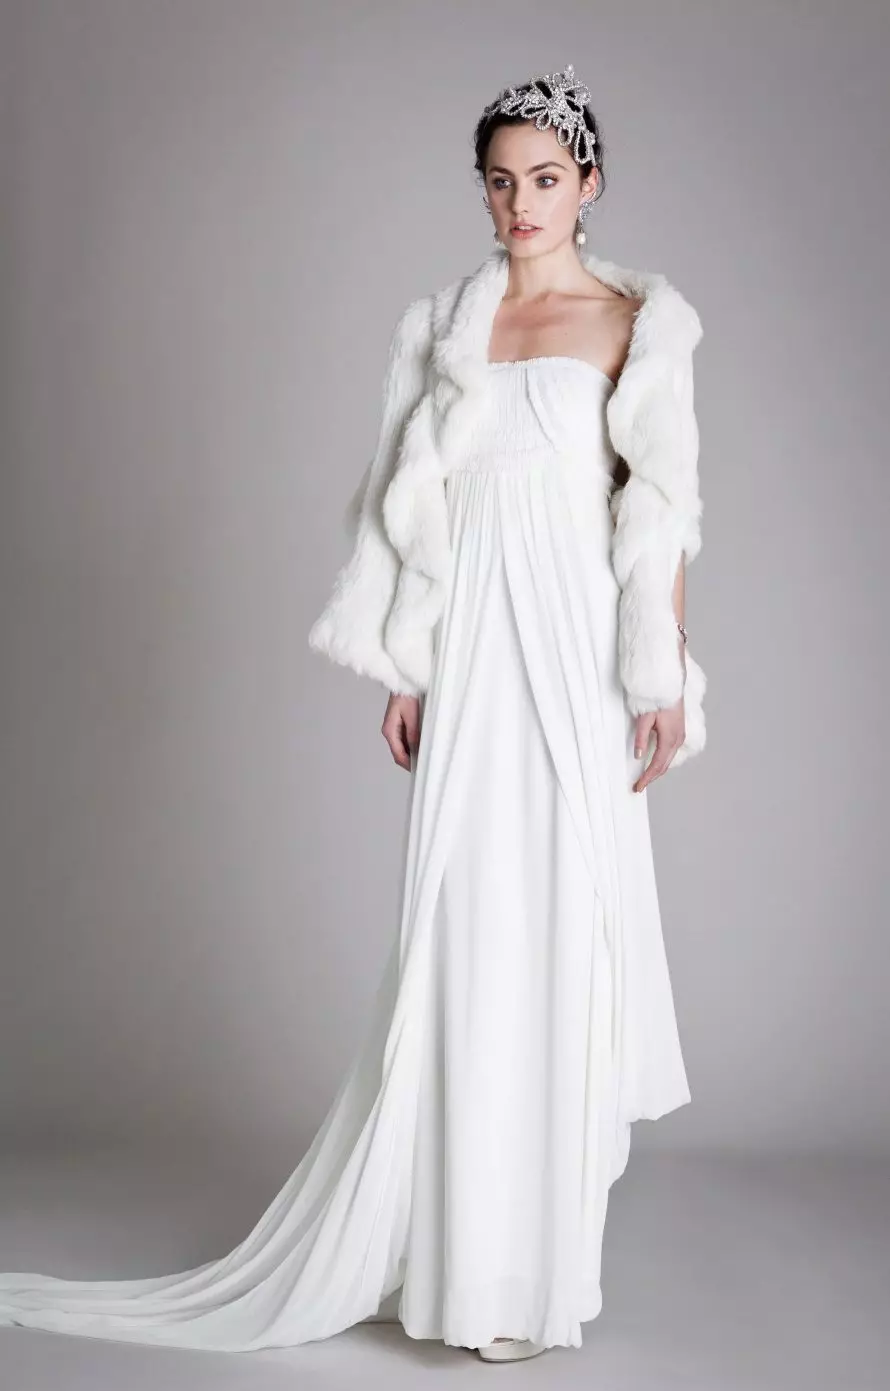 Fur Cape to Wedding Dress